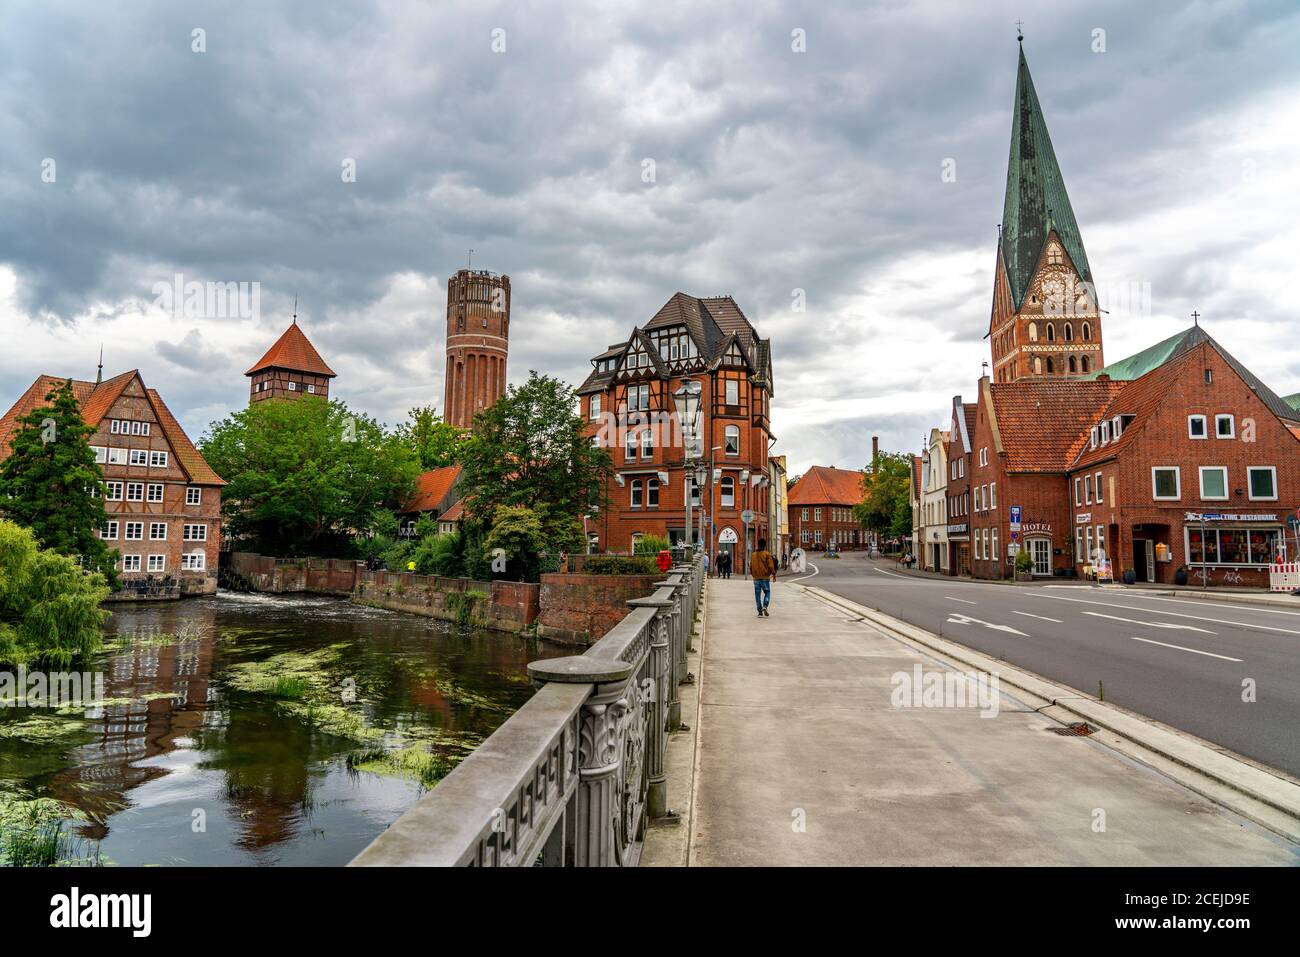 The water tower, river Ilmenau, Ratsmühle, St.Johanniskirche, city center, old town of Lüneburg, Lower Saxony, Germany Stock Photo